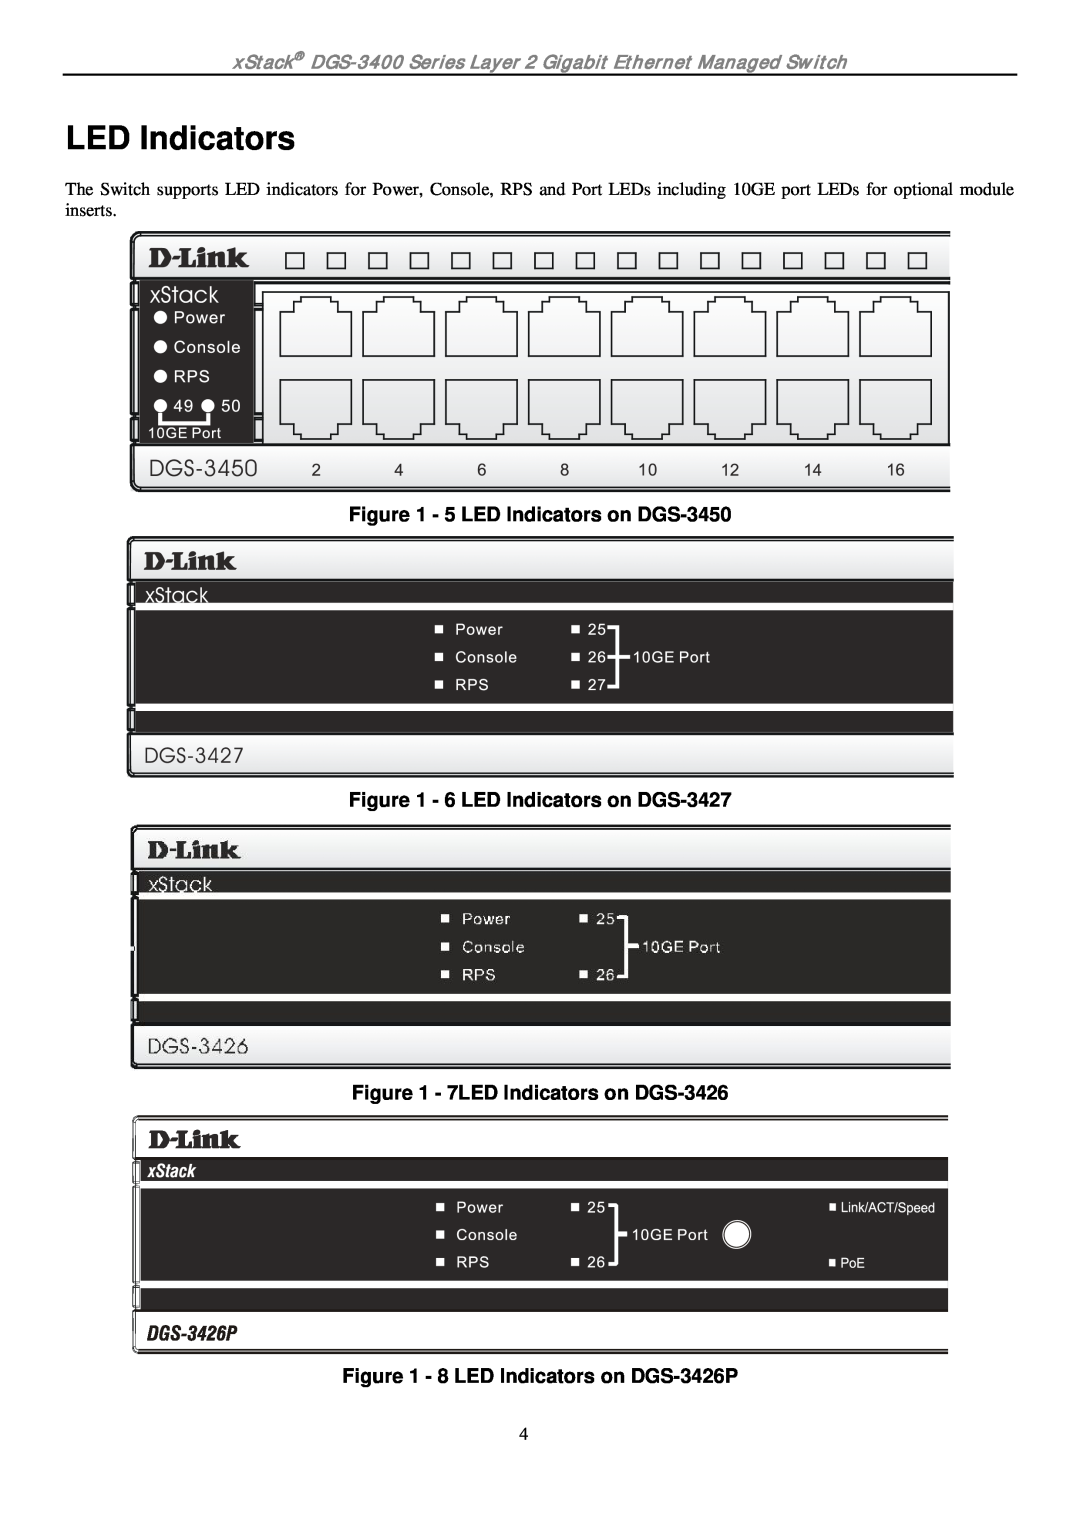 D-Link ethernet managed switch 5 LED Indicators on DGS-3450, 6 LED Indicators on DGS-3427, 7LED Indicators on DGS-3426 